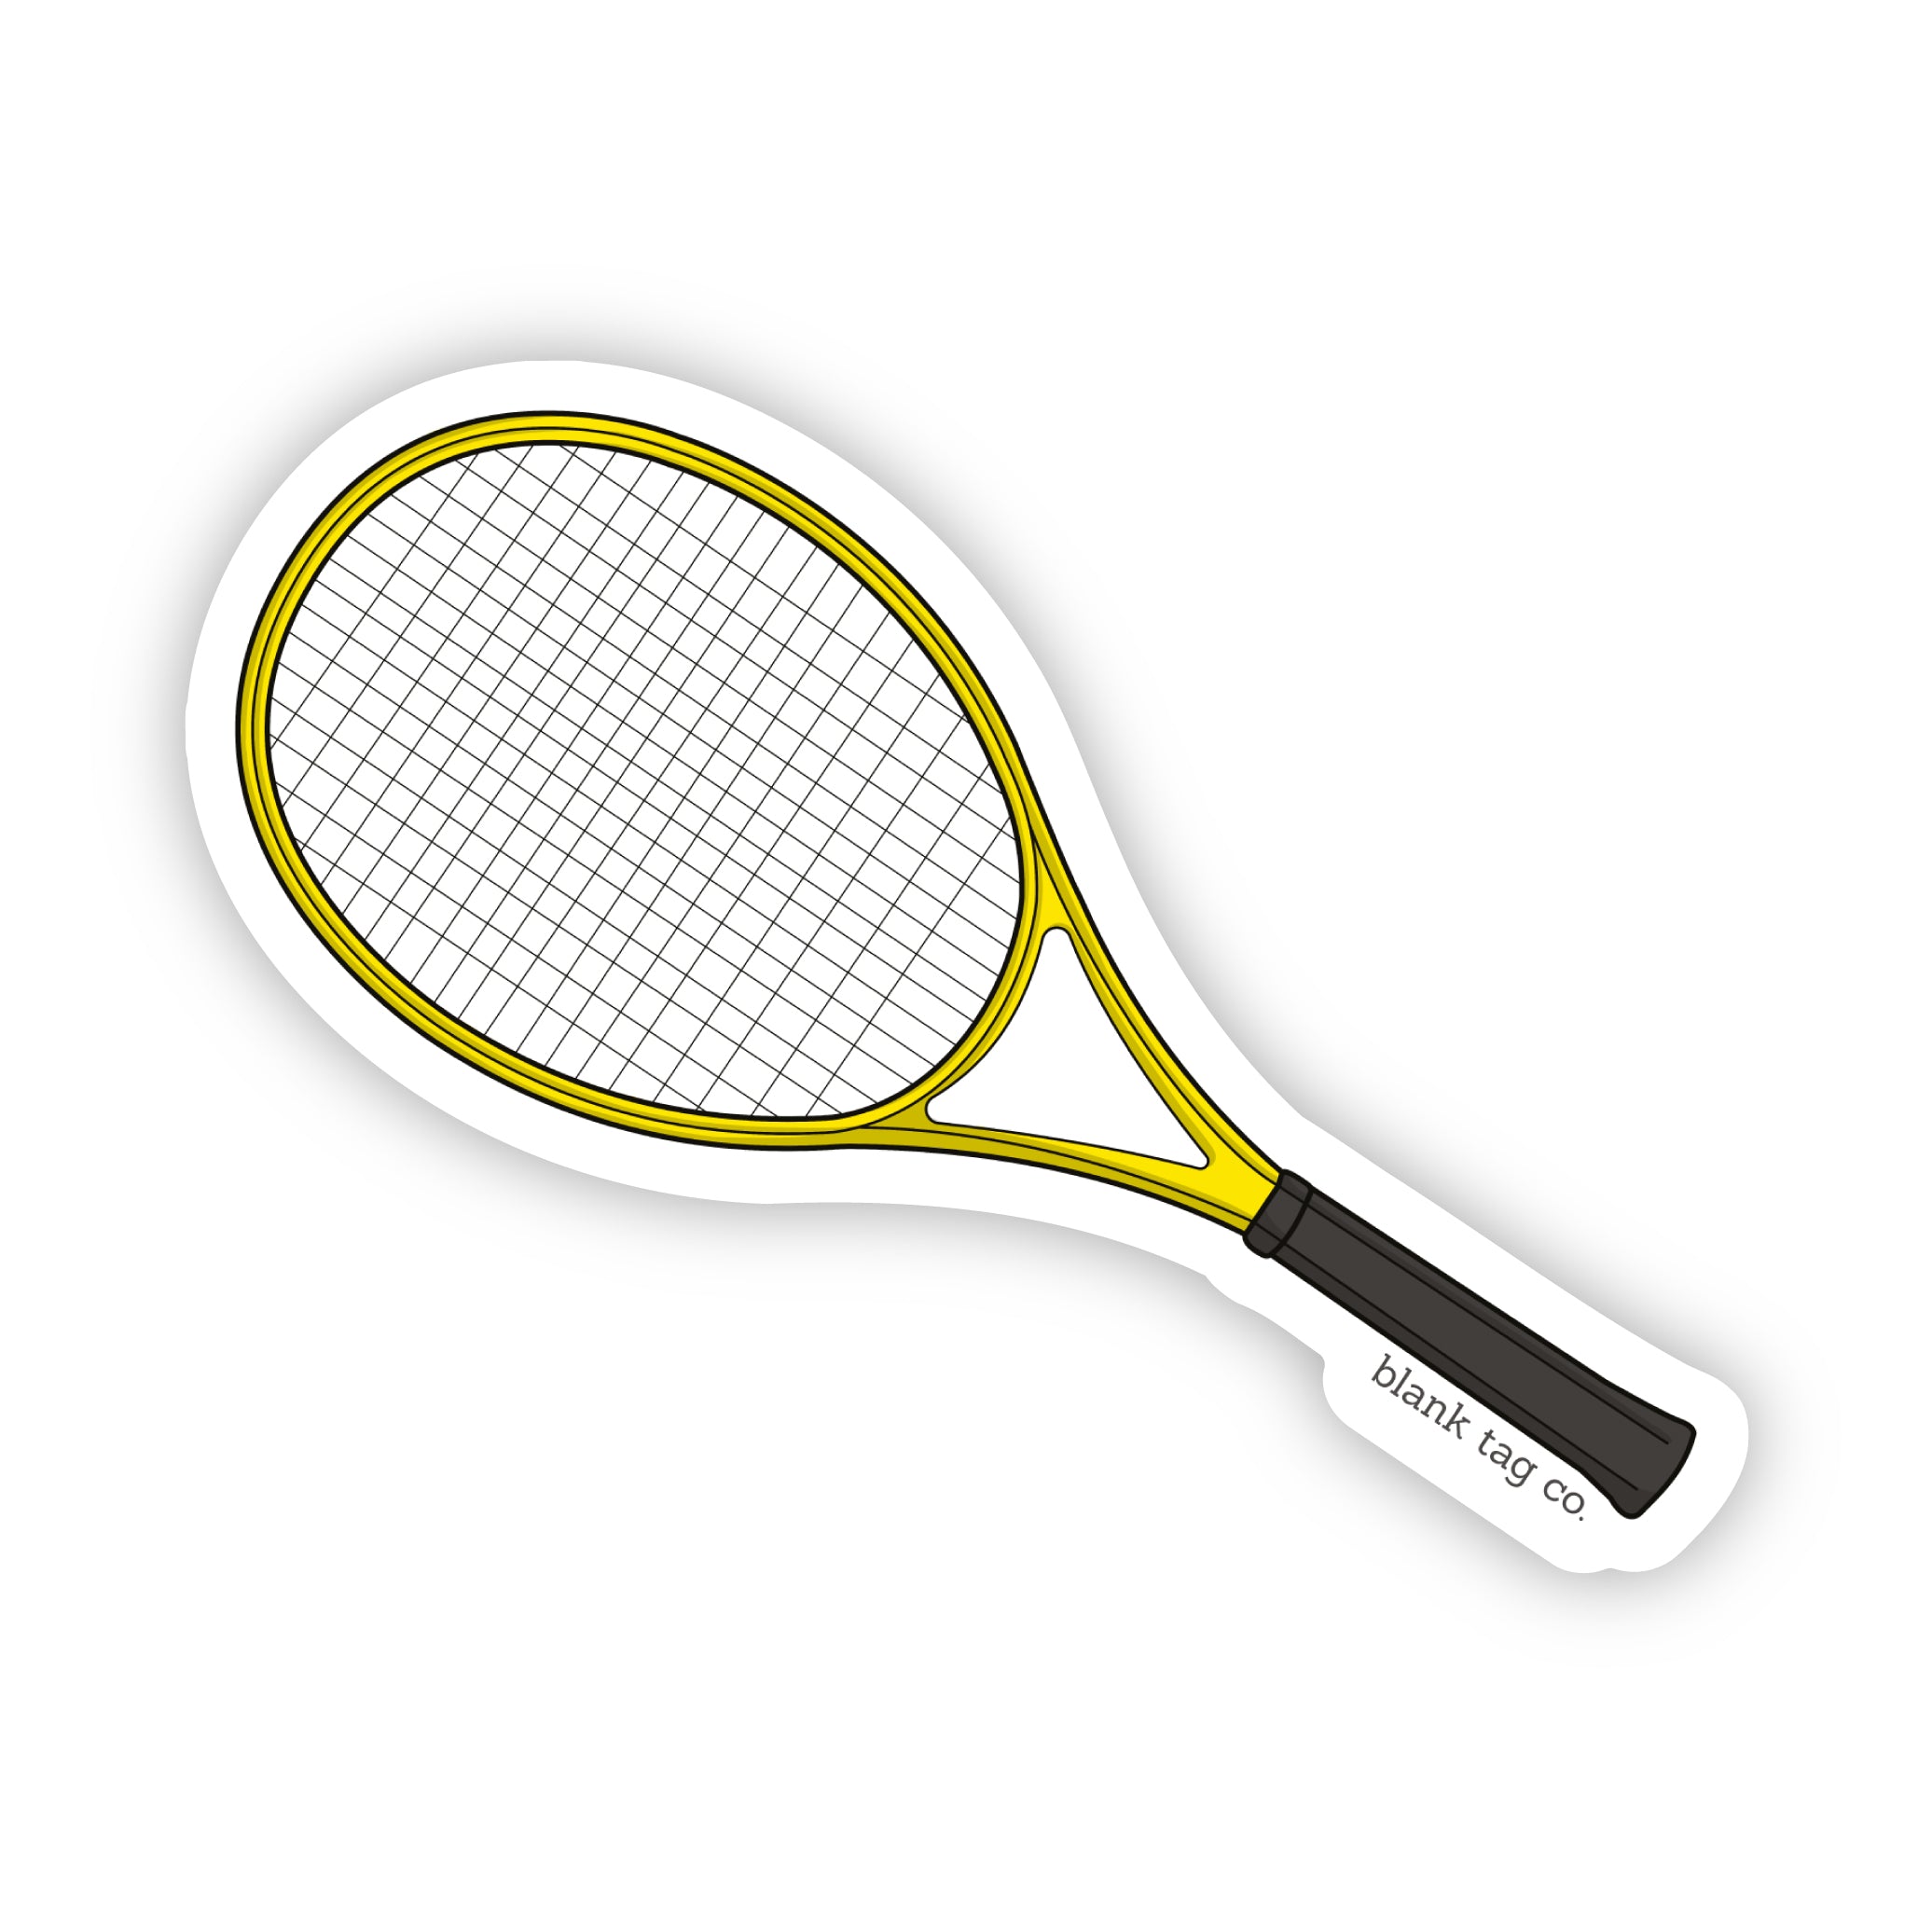 The Tennis Racket Sticker